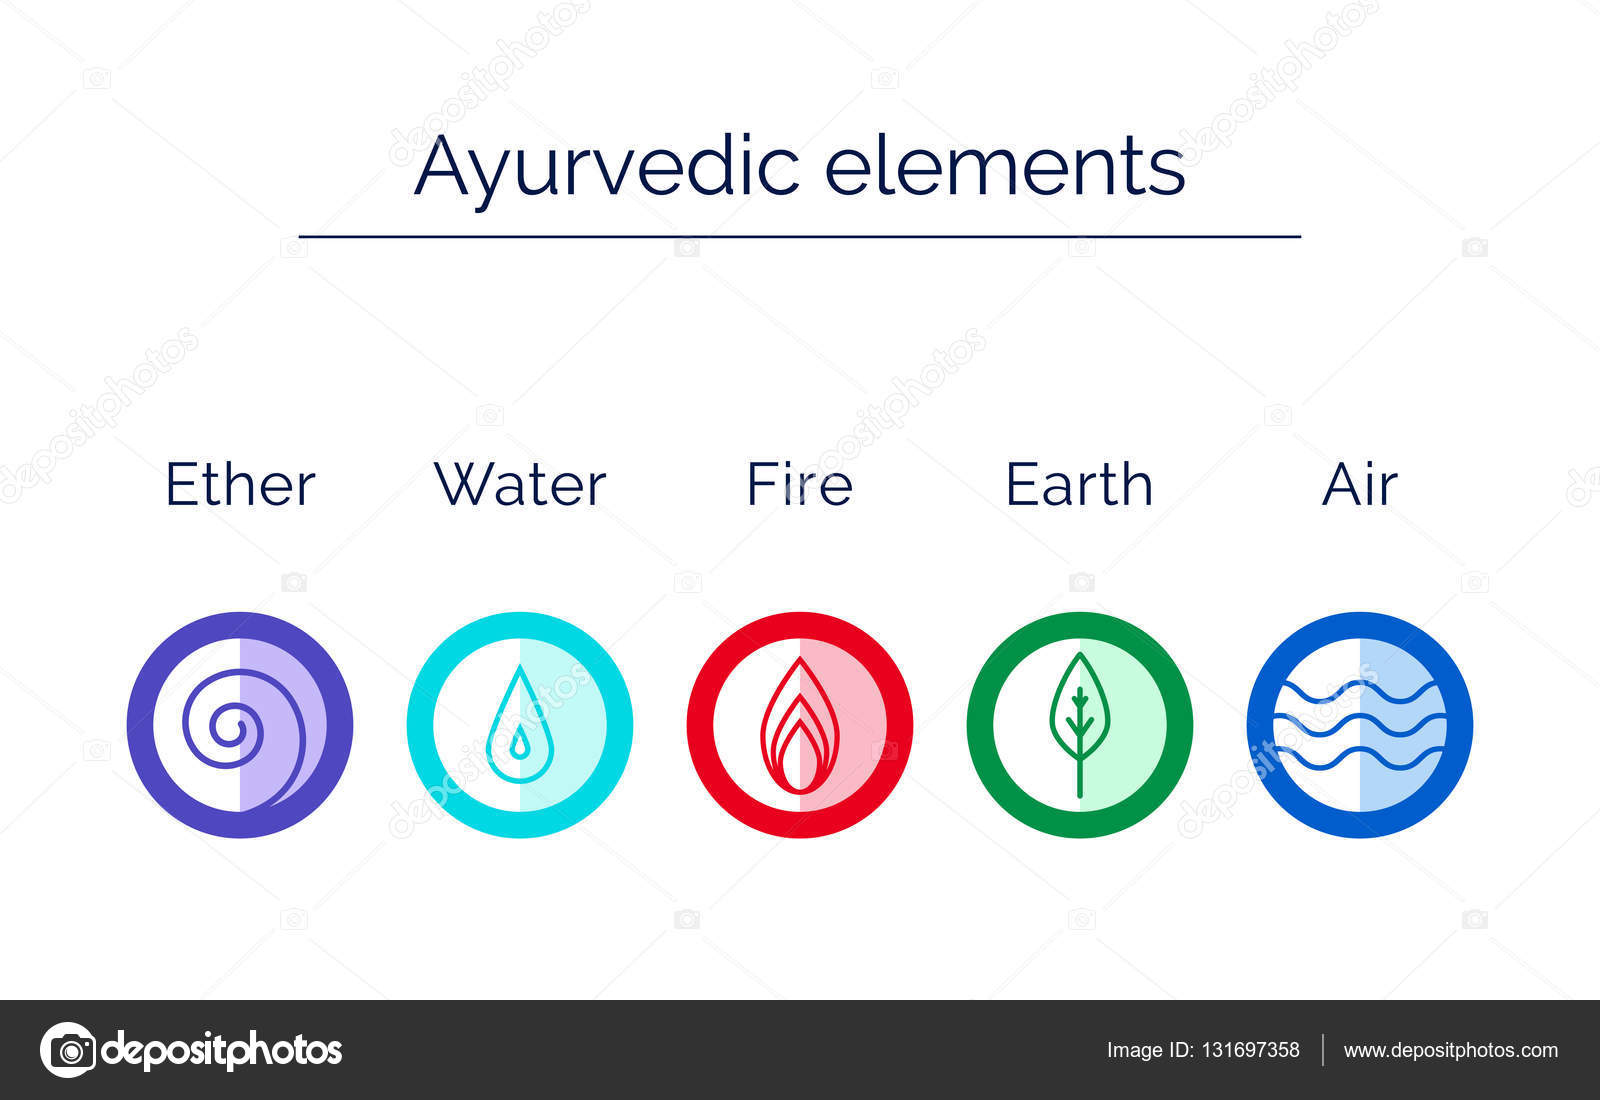 5 Elementos Ayurveda - Éter, Ar, Fogo, Água e Terra